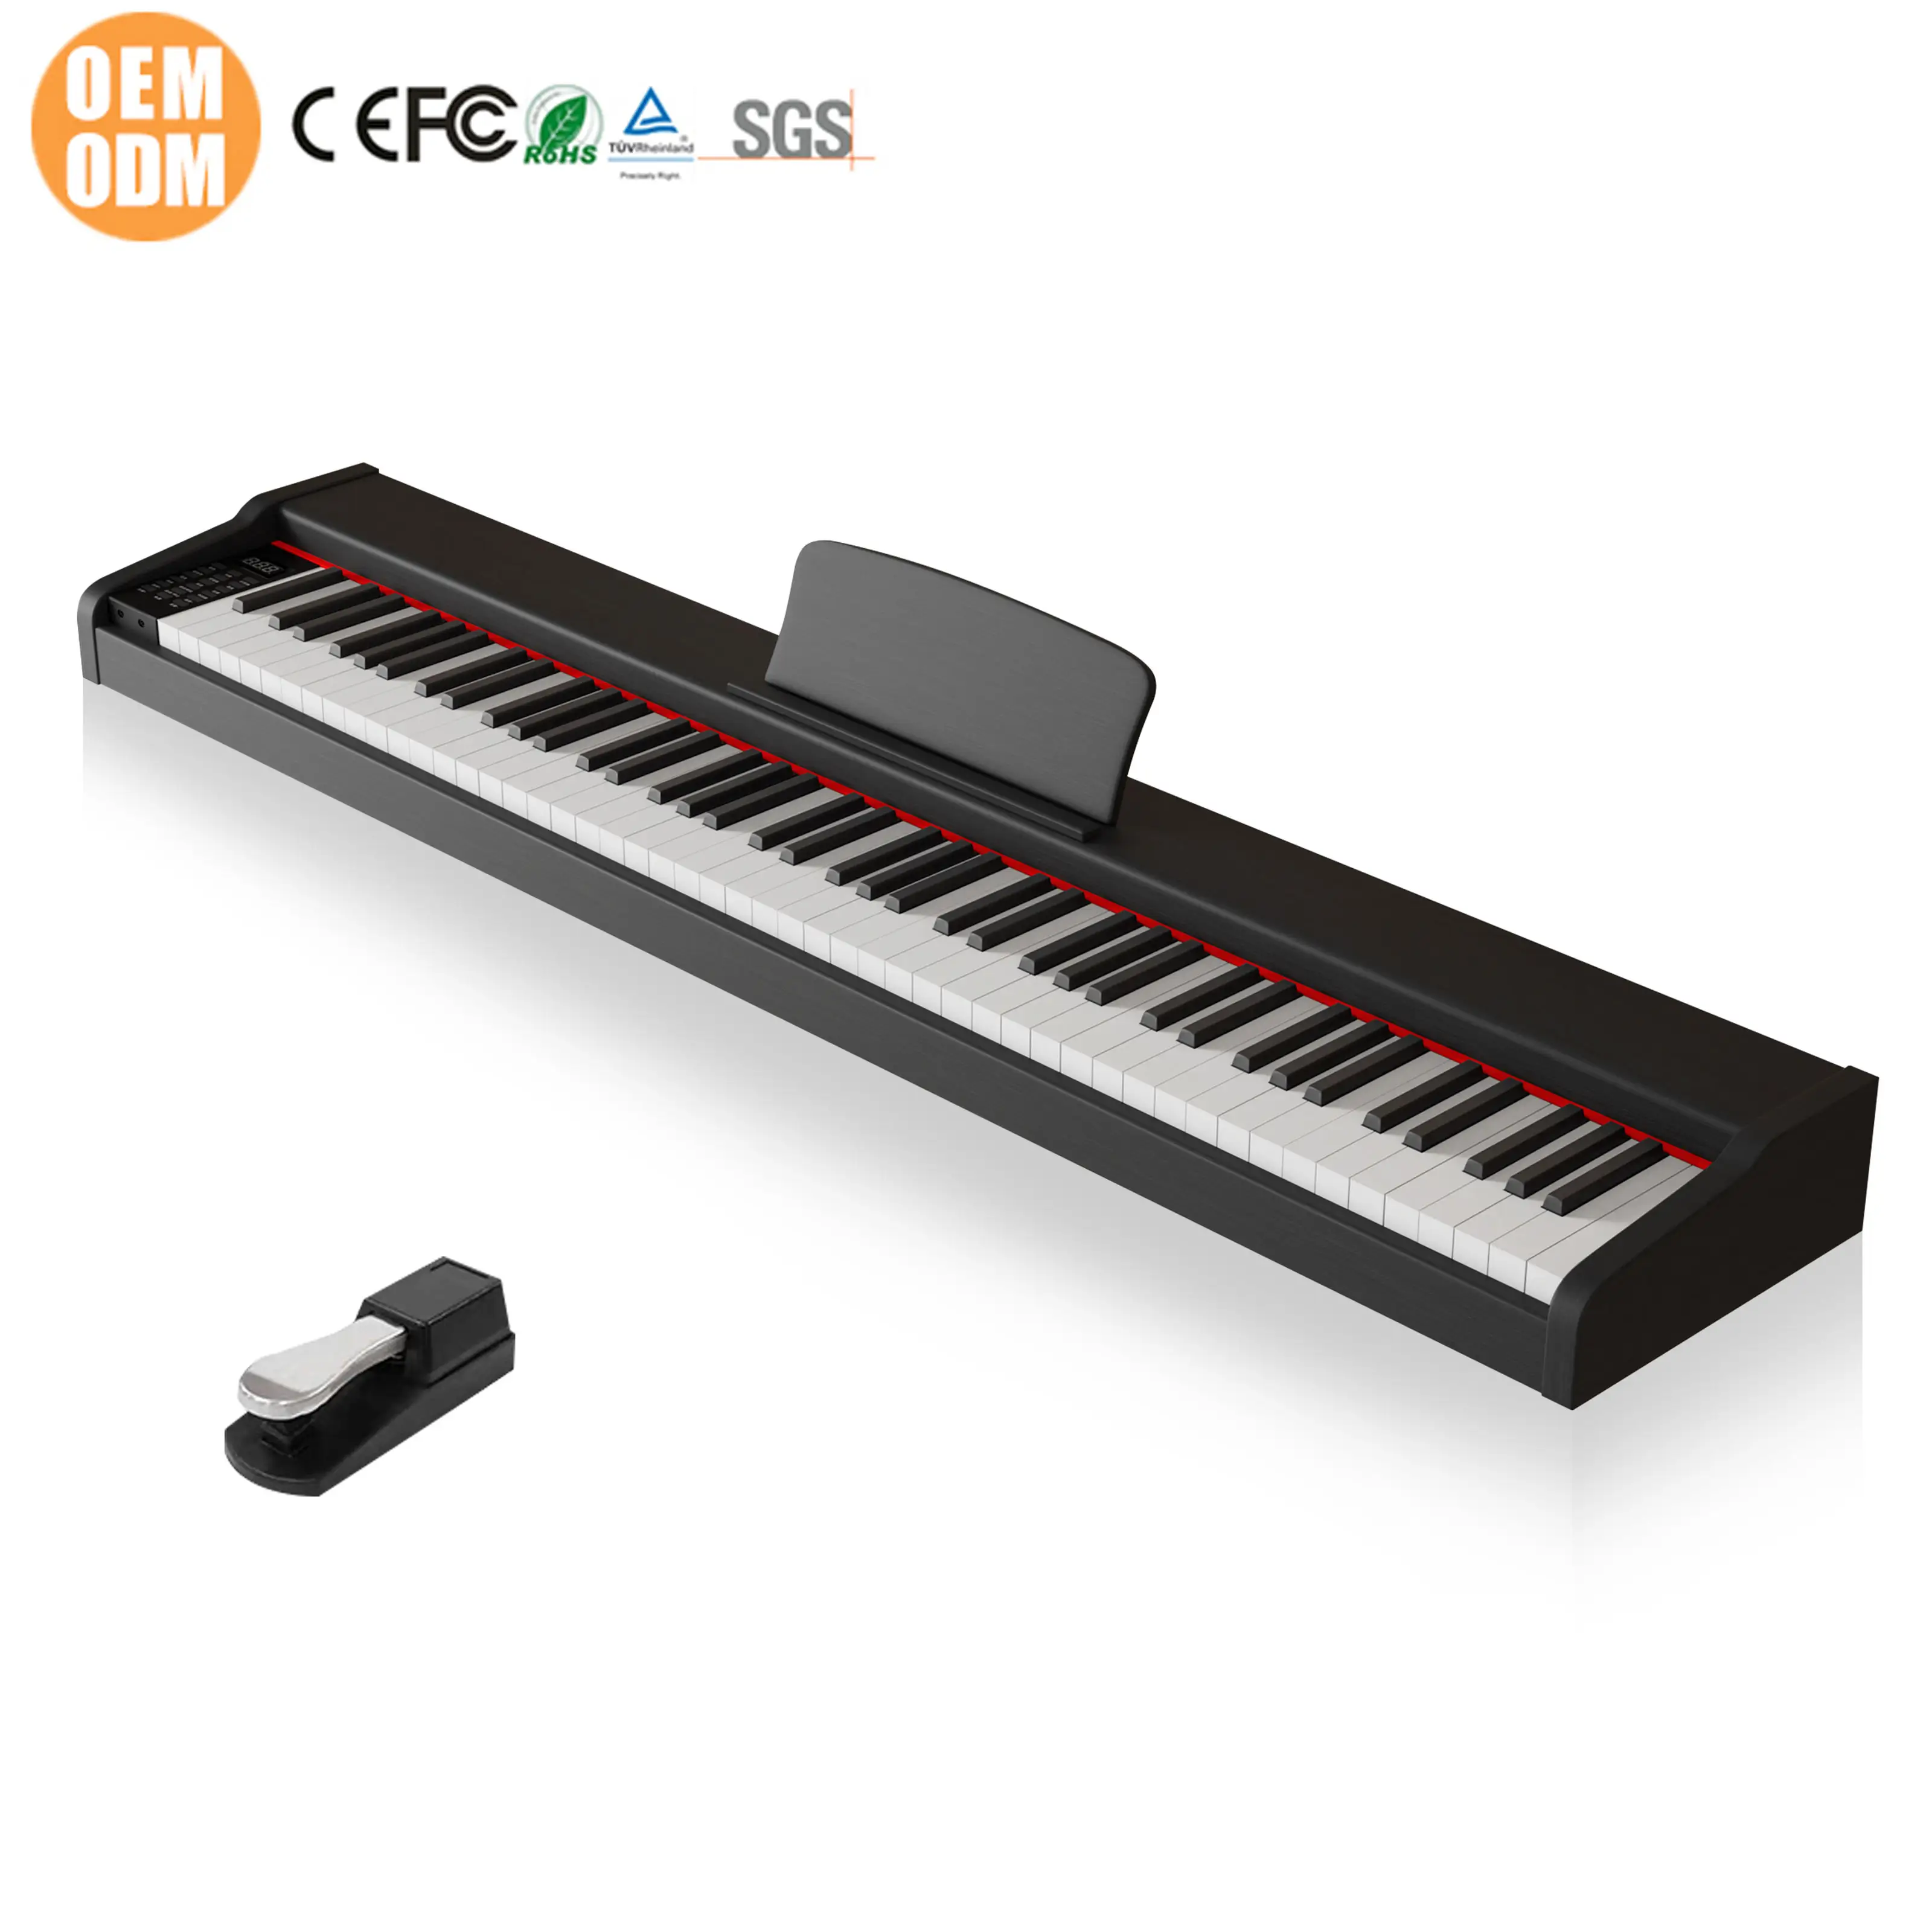 hamzer 61-key digital music piano keyboard